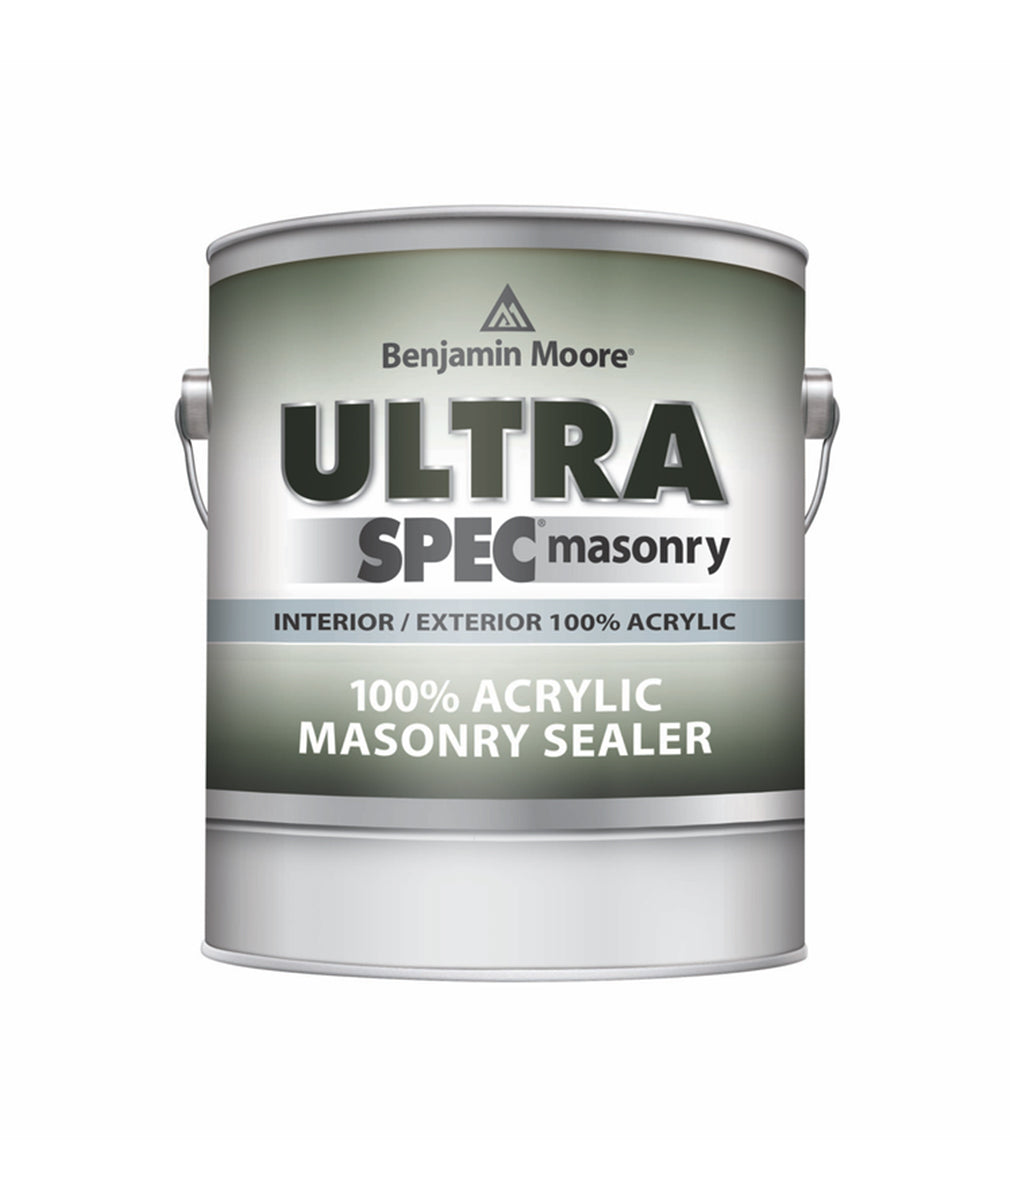 Benjamin Moore Ultra Spec Interior/Exterior Masonry Sealer, available at Regal Paint Centers in MD.